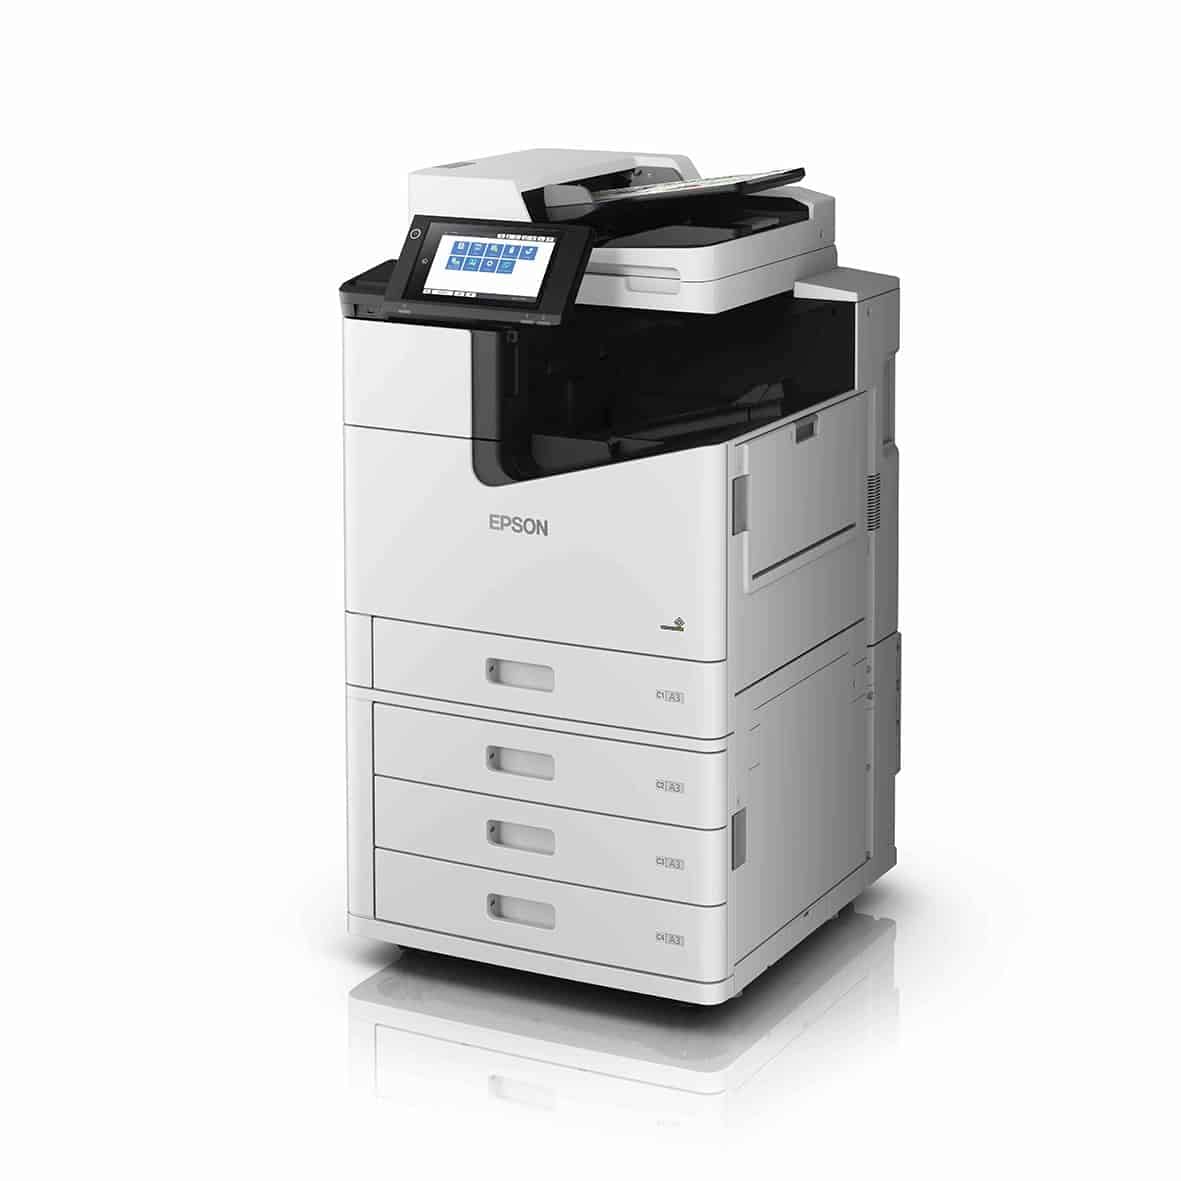 epson printer image003